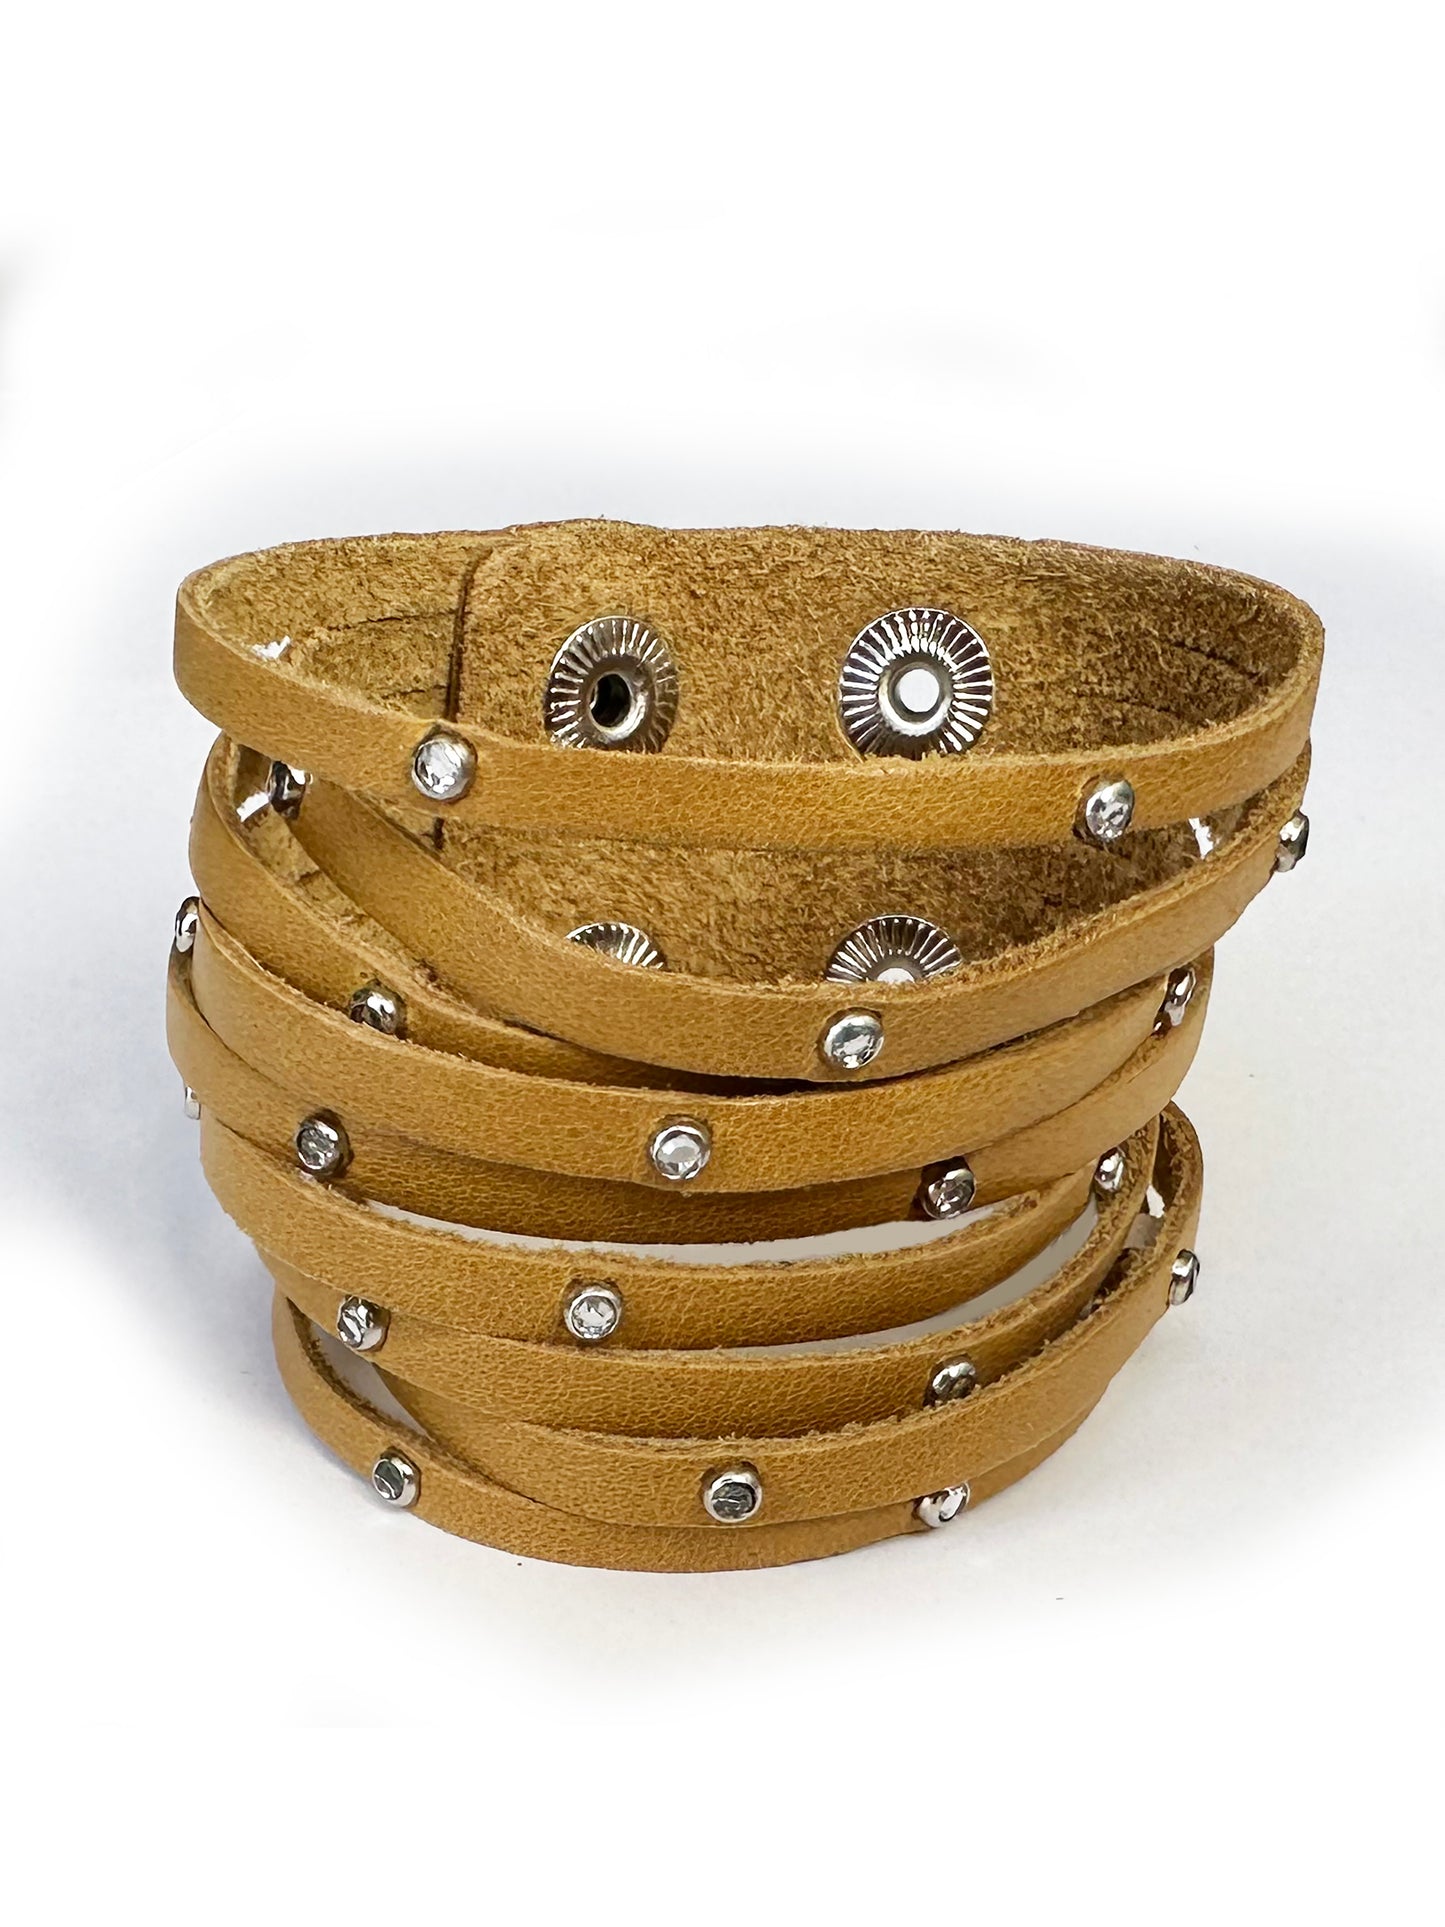 Charlie Rhinestone Leather Bracelet in Light Brown - SpiritedBoutiques Boho Hippie Boutique Style Bracelet, Charlie Leather